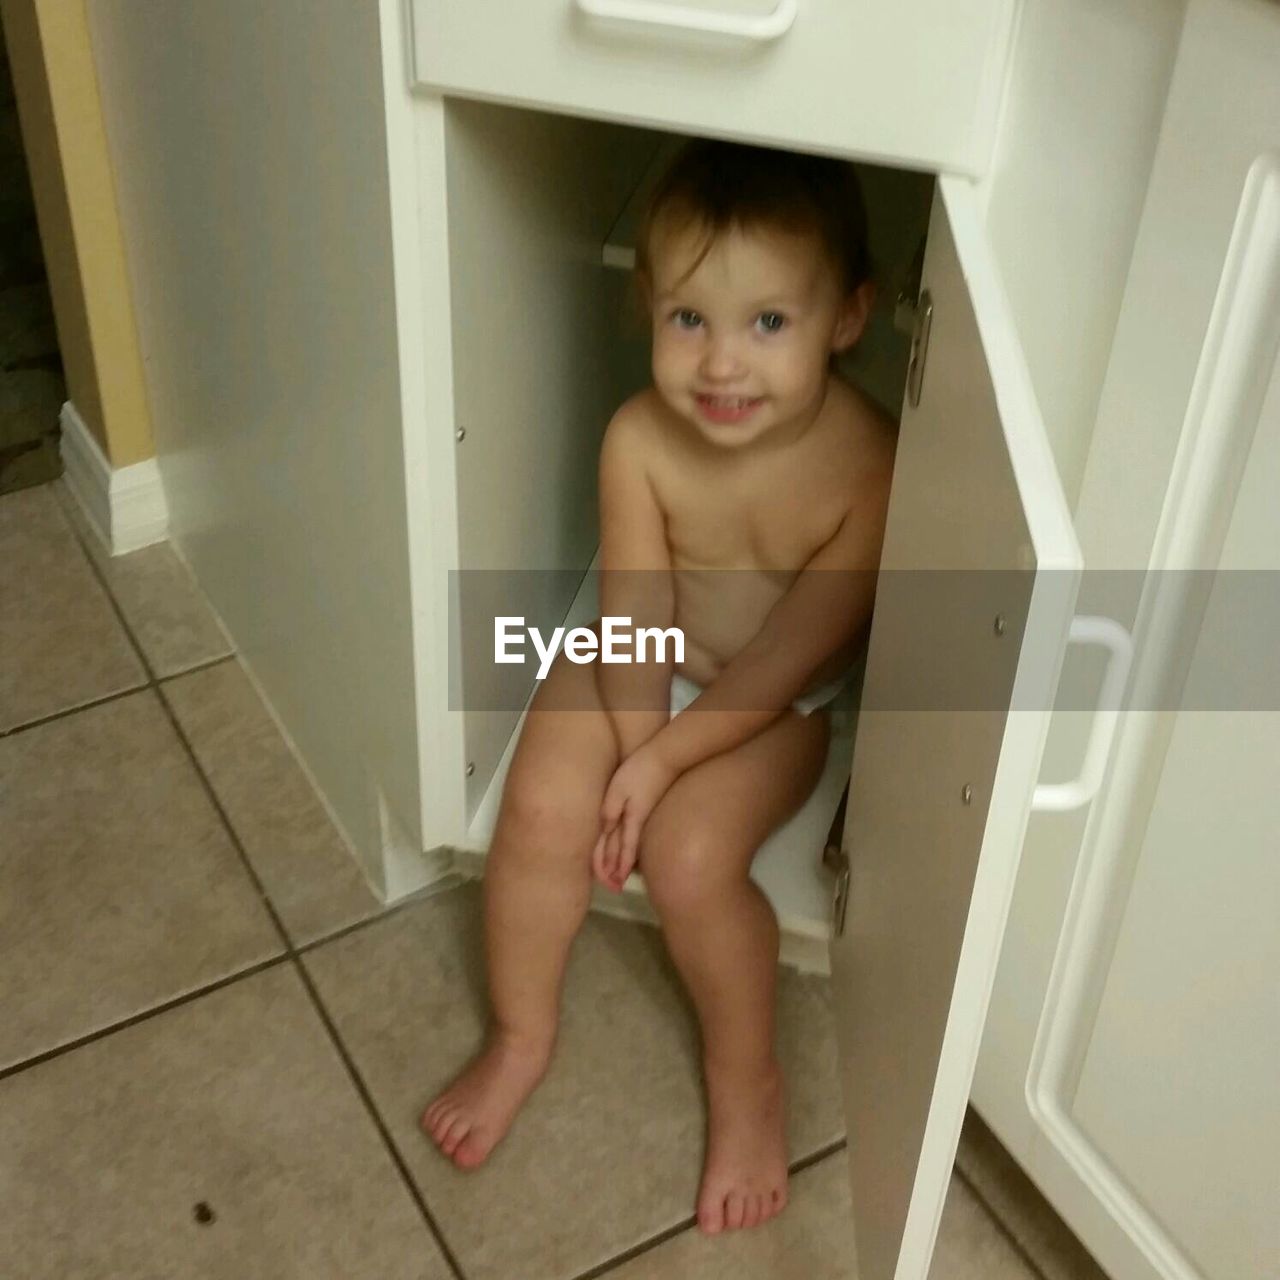 PORTRAIT OF SHIRTLESS BABY BOY IN BATHROOM